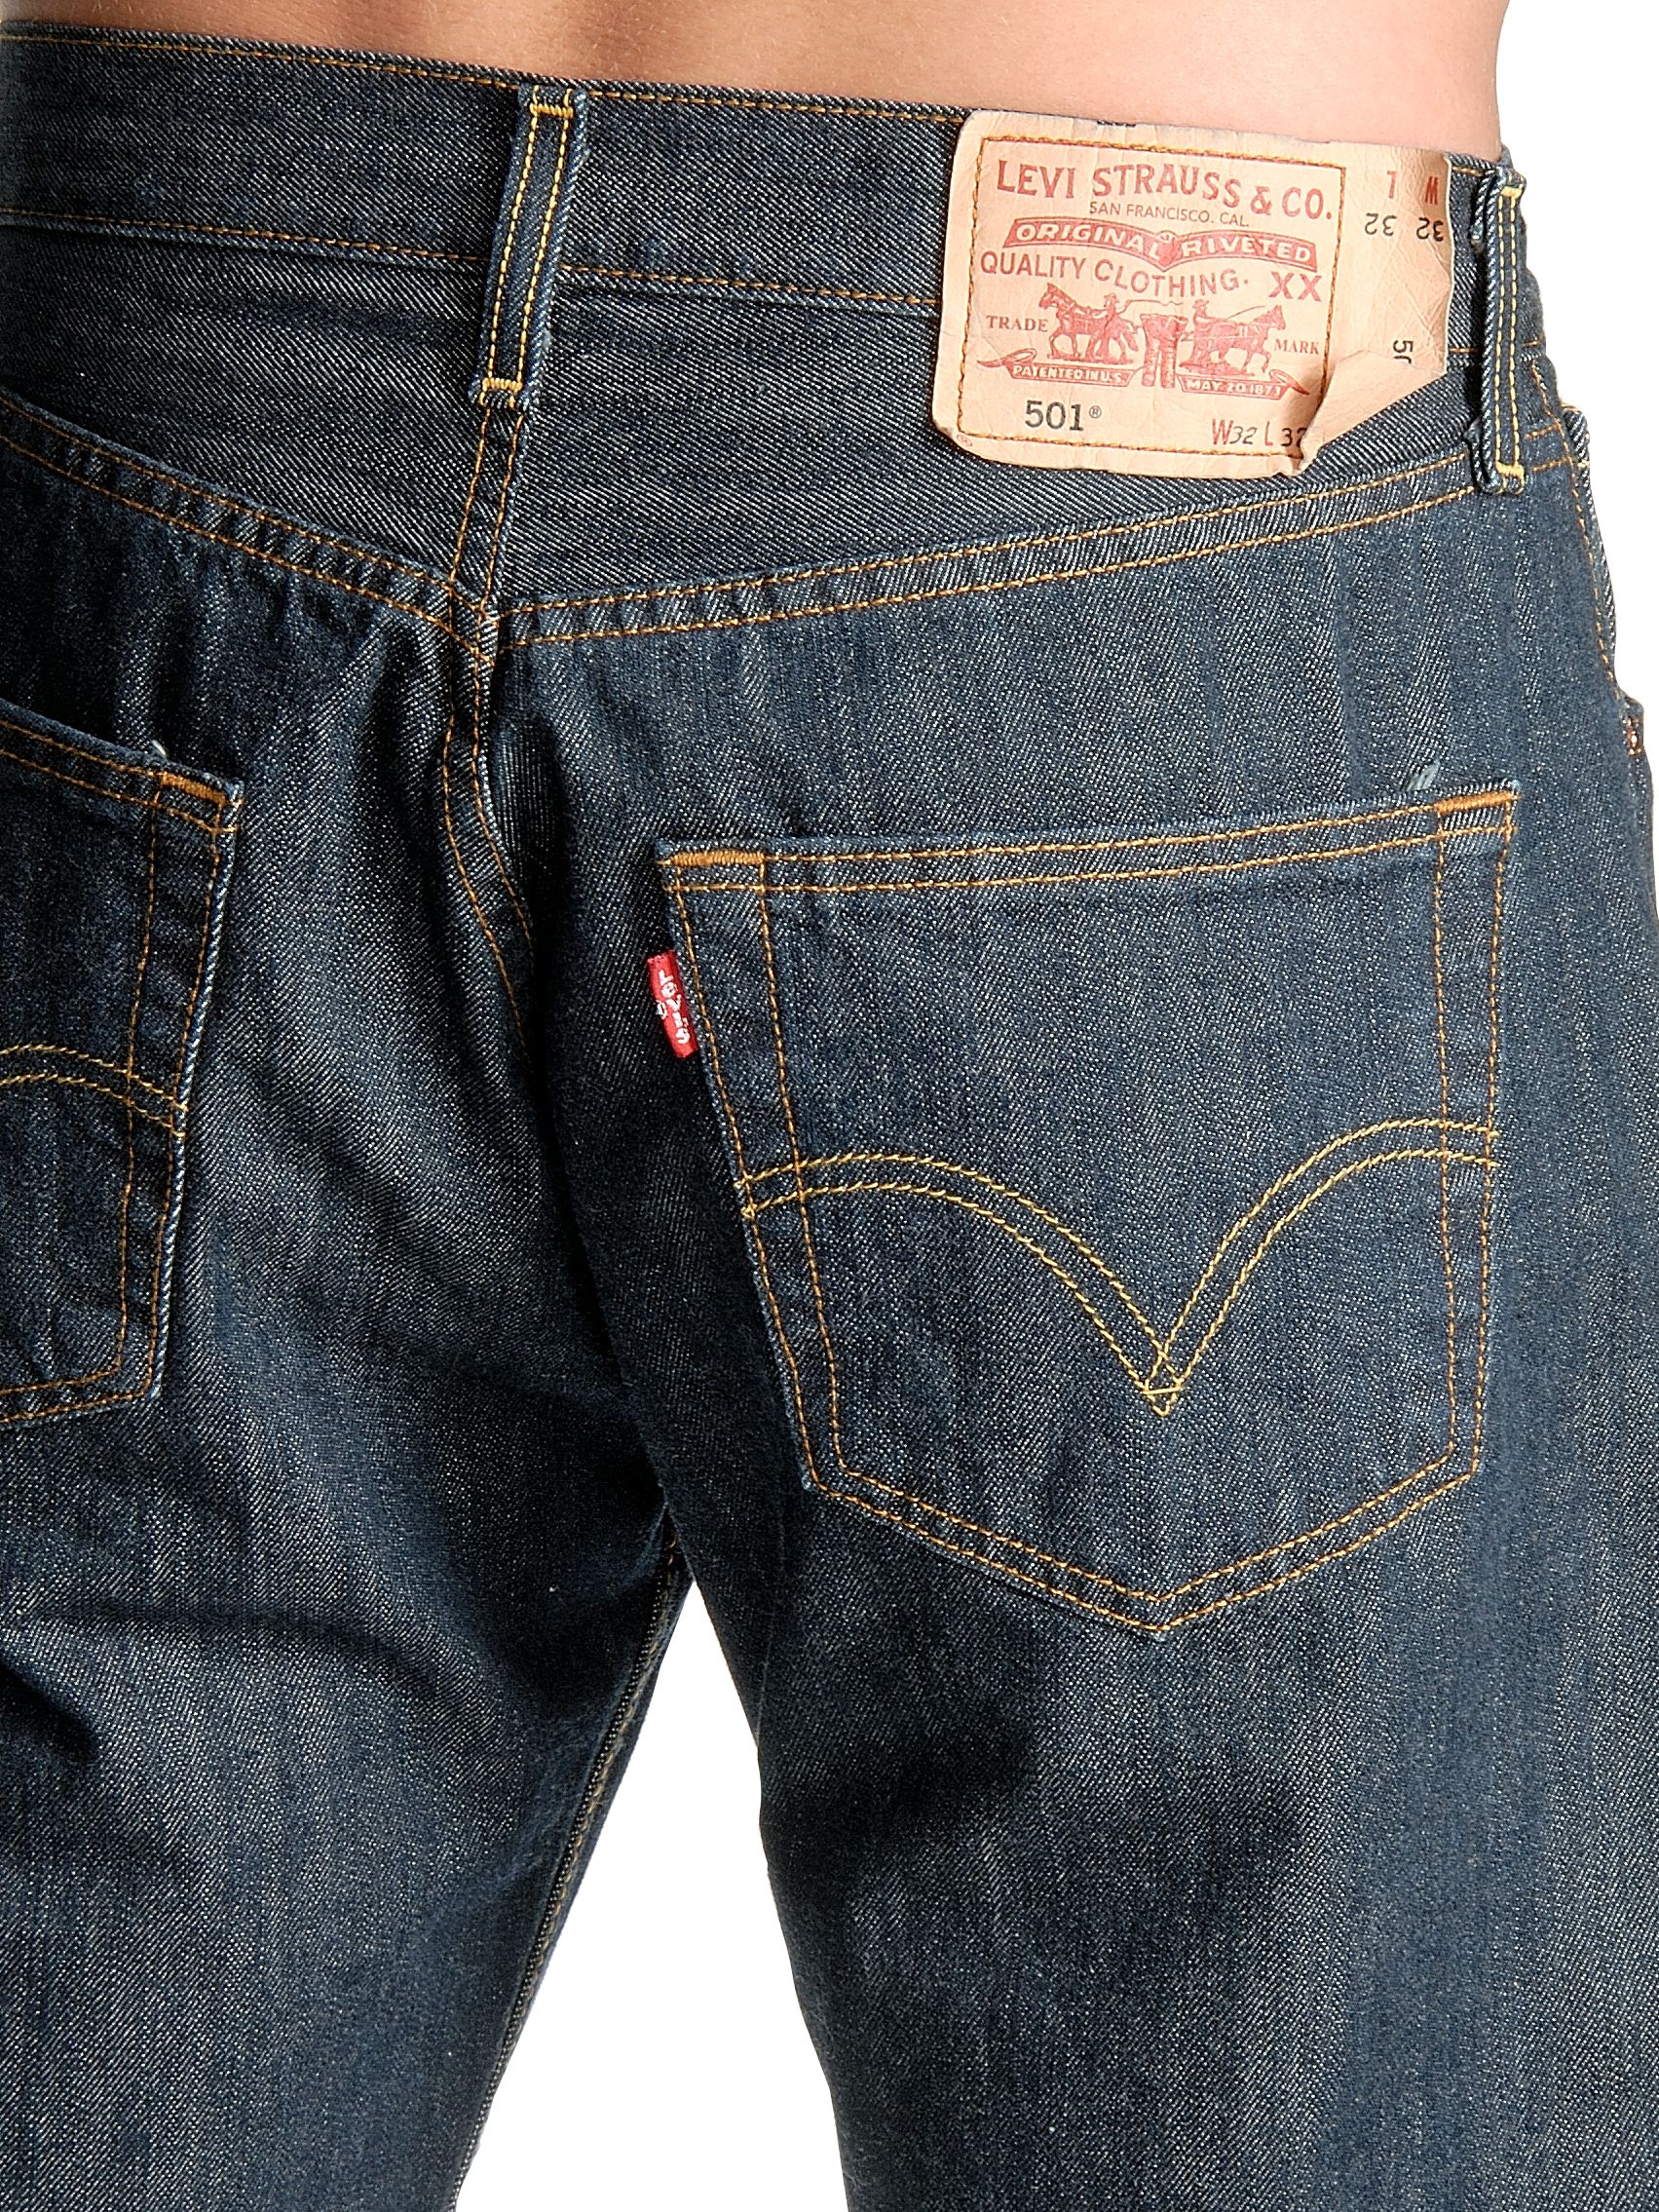 jeans levis 501 original riveted